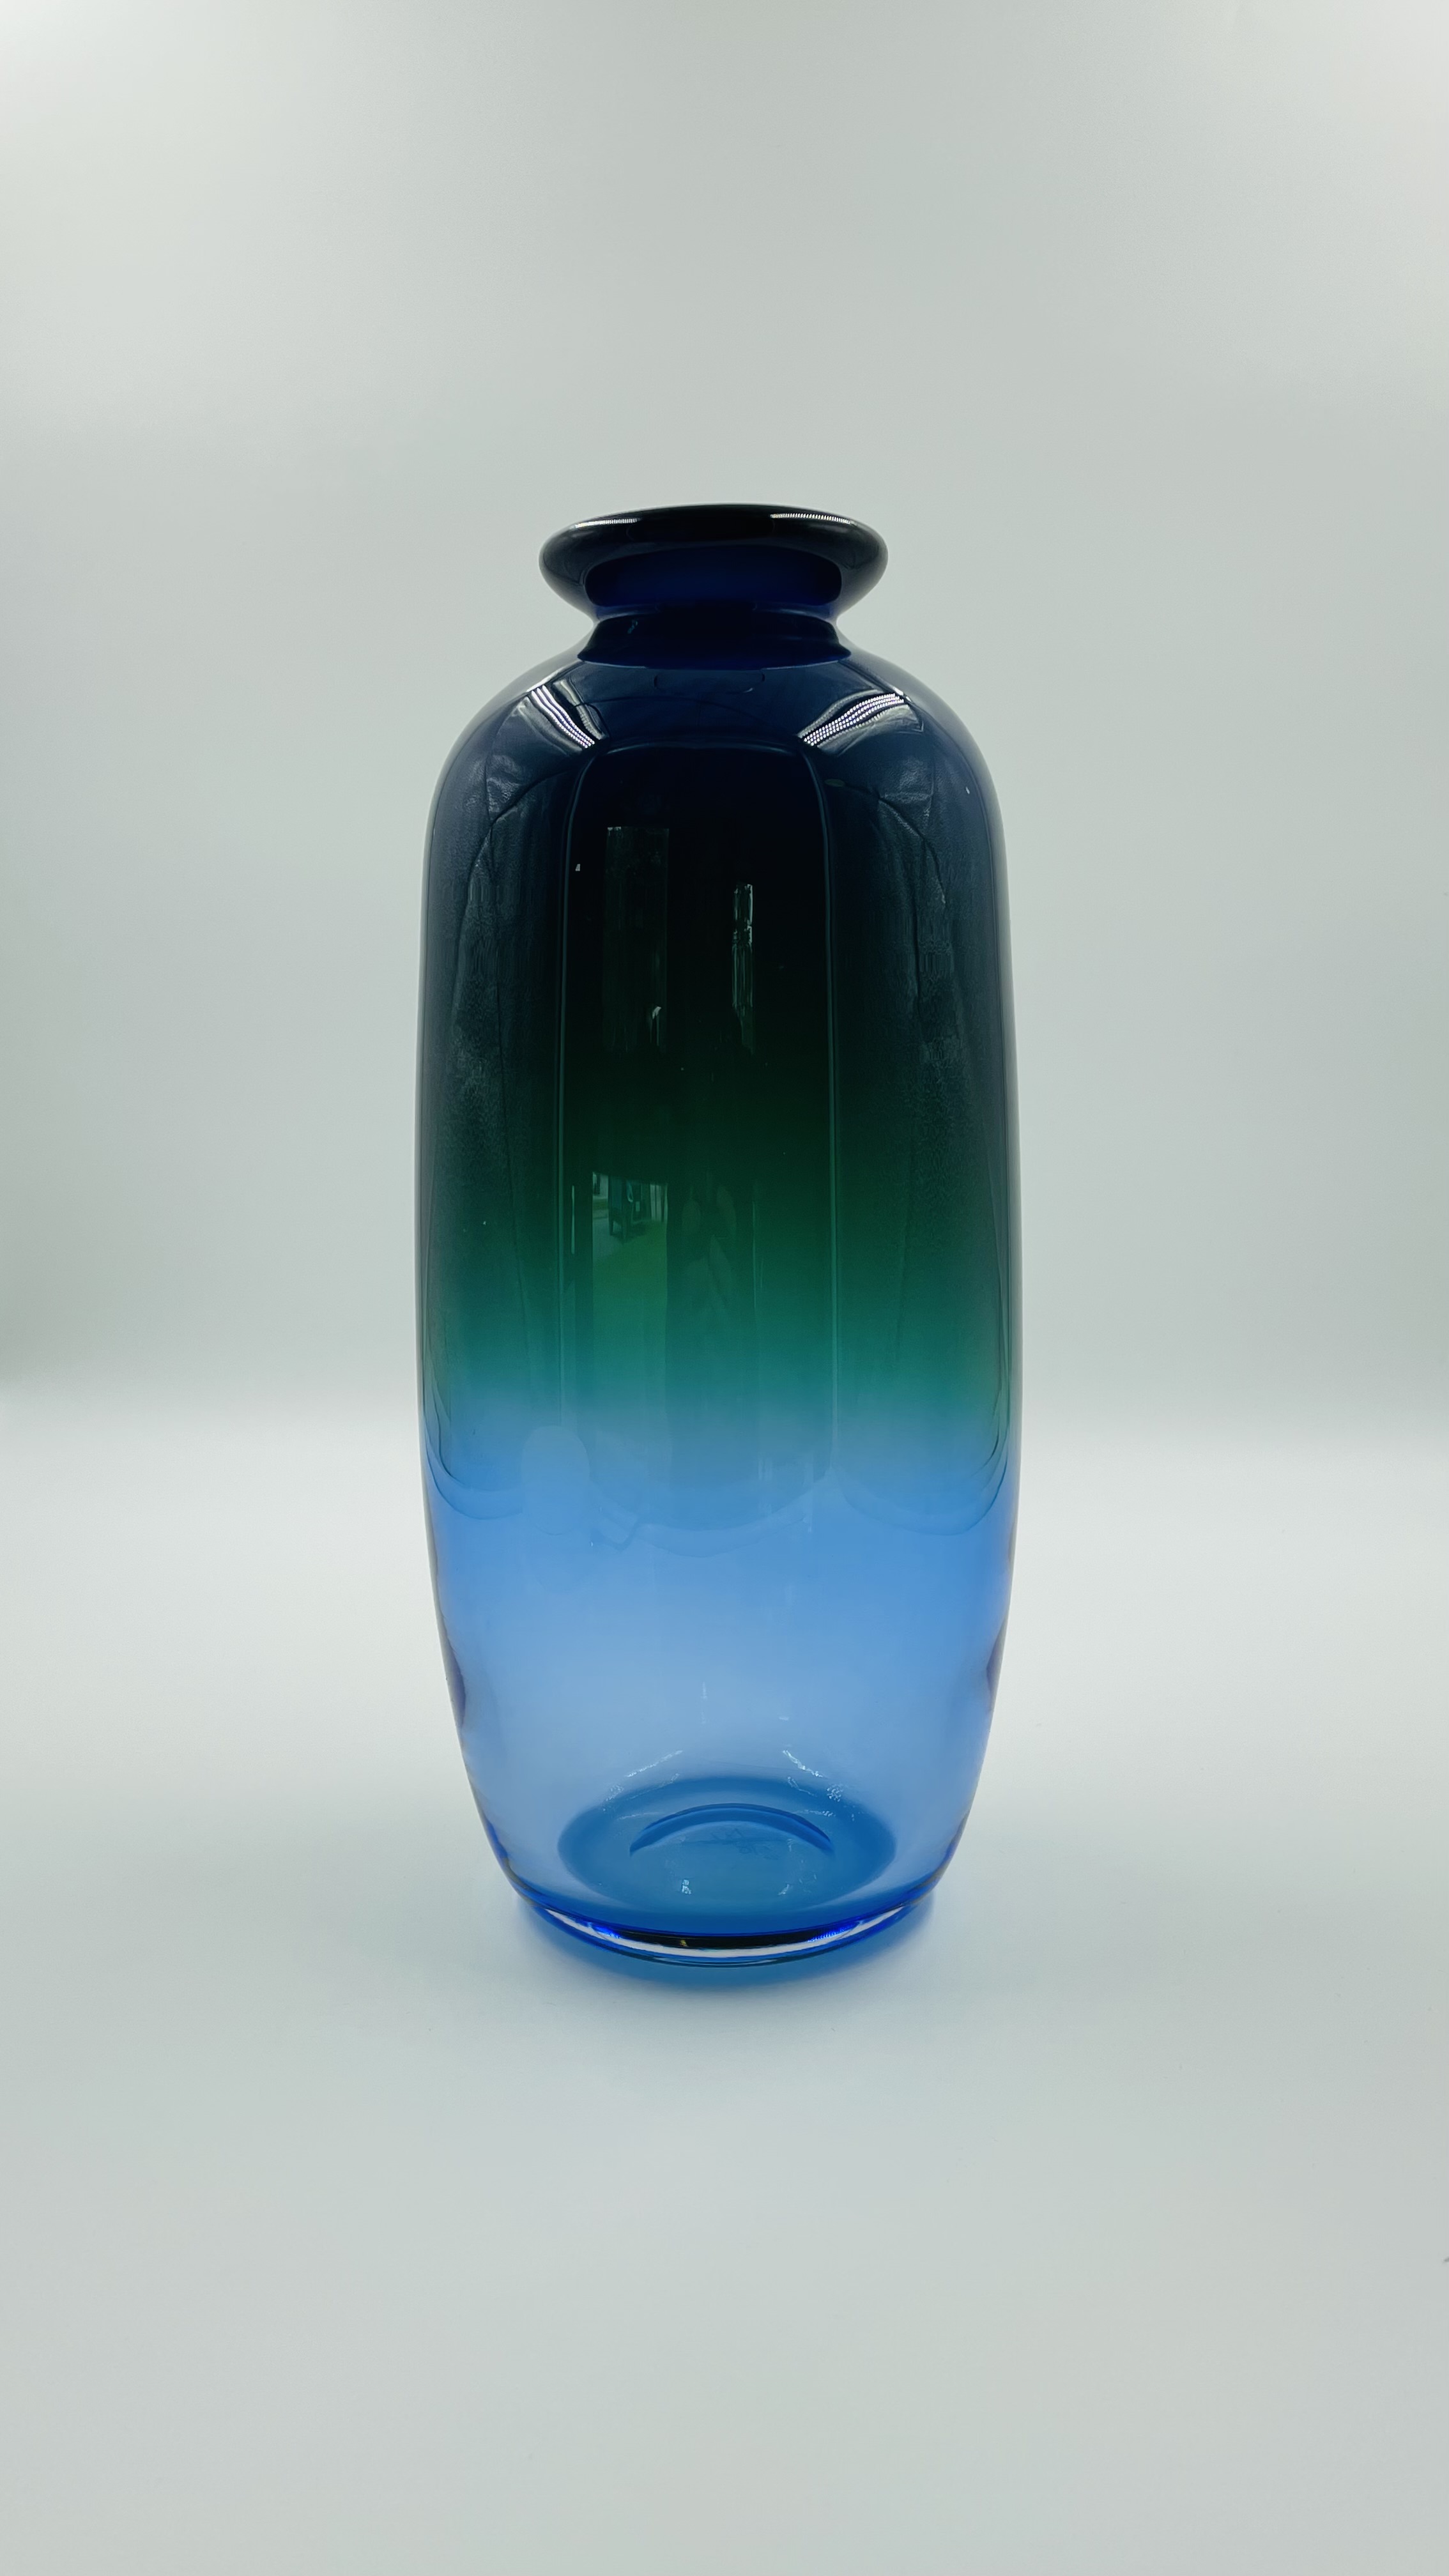 Vase mit Farbverlauf. Foto: ARBERLAND REGio GmbH.